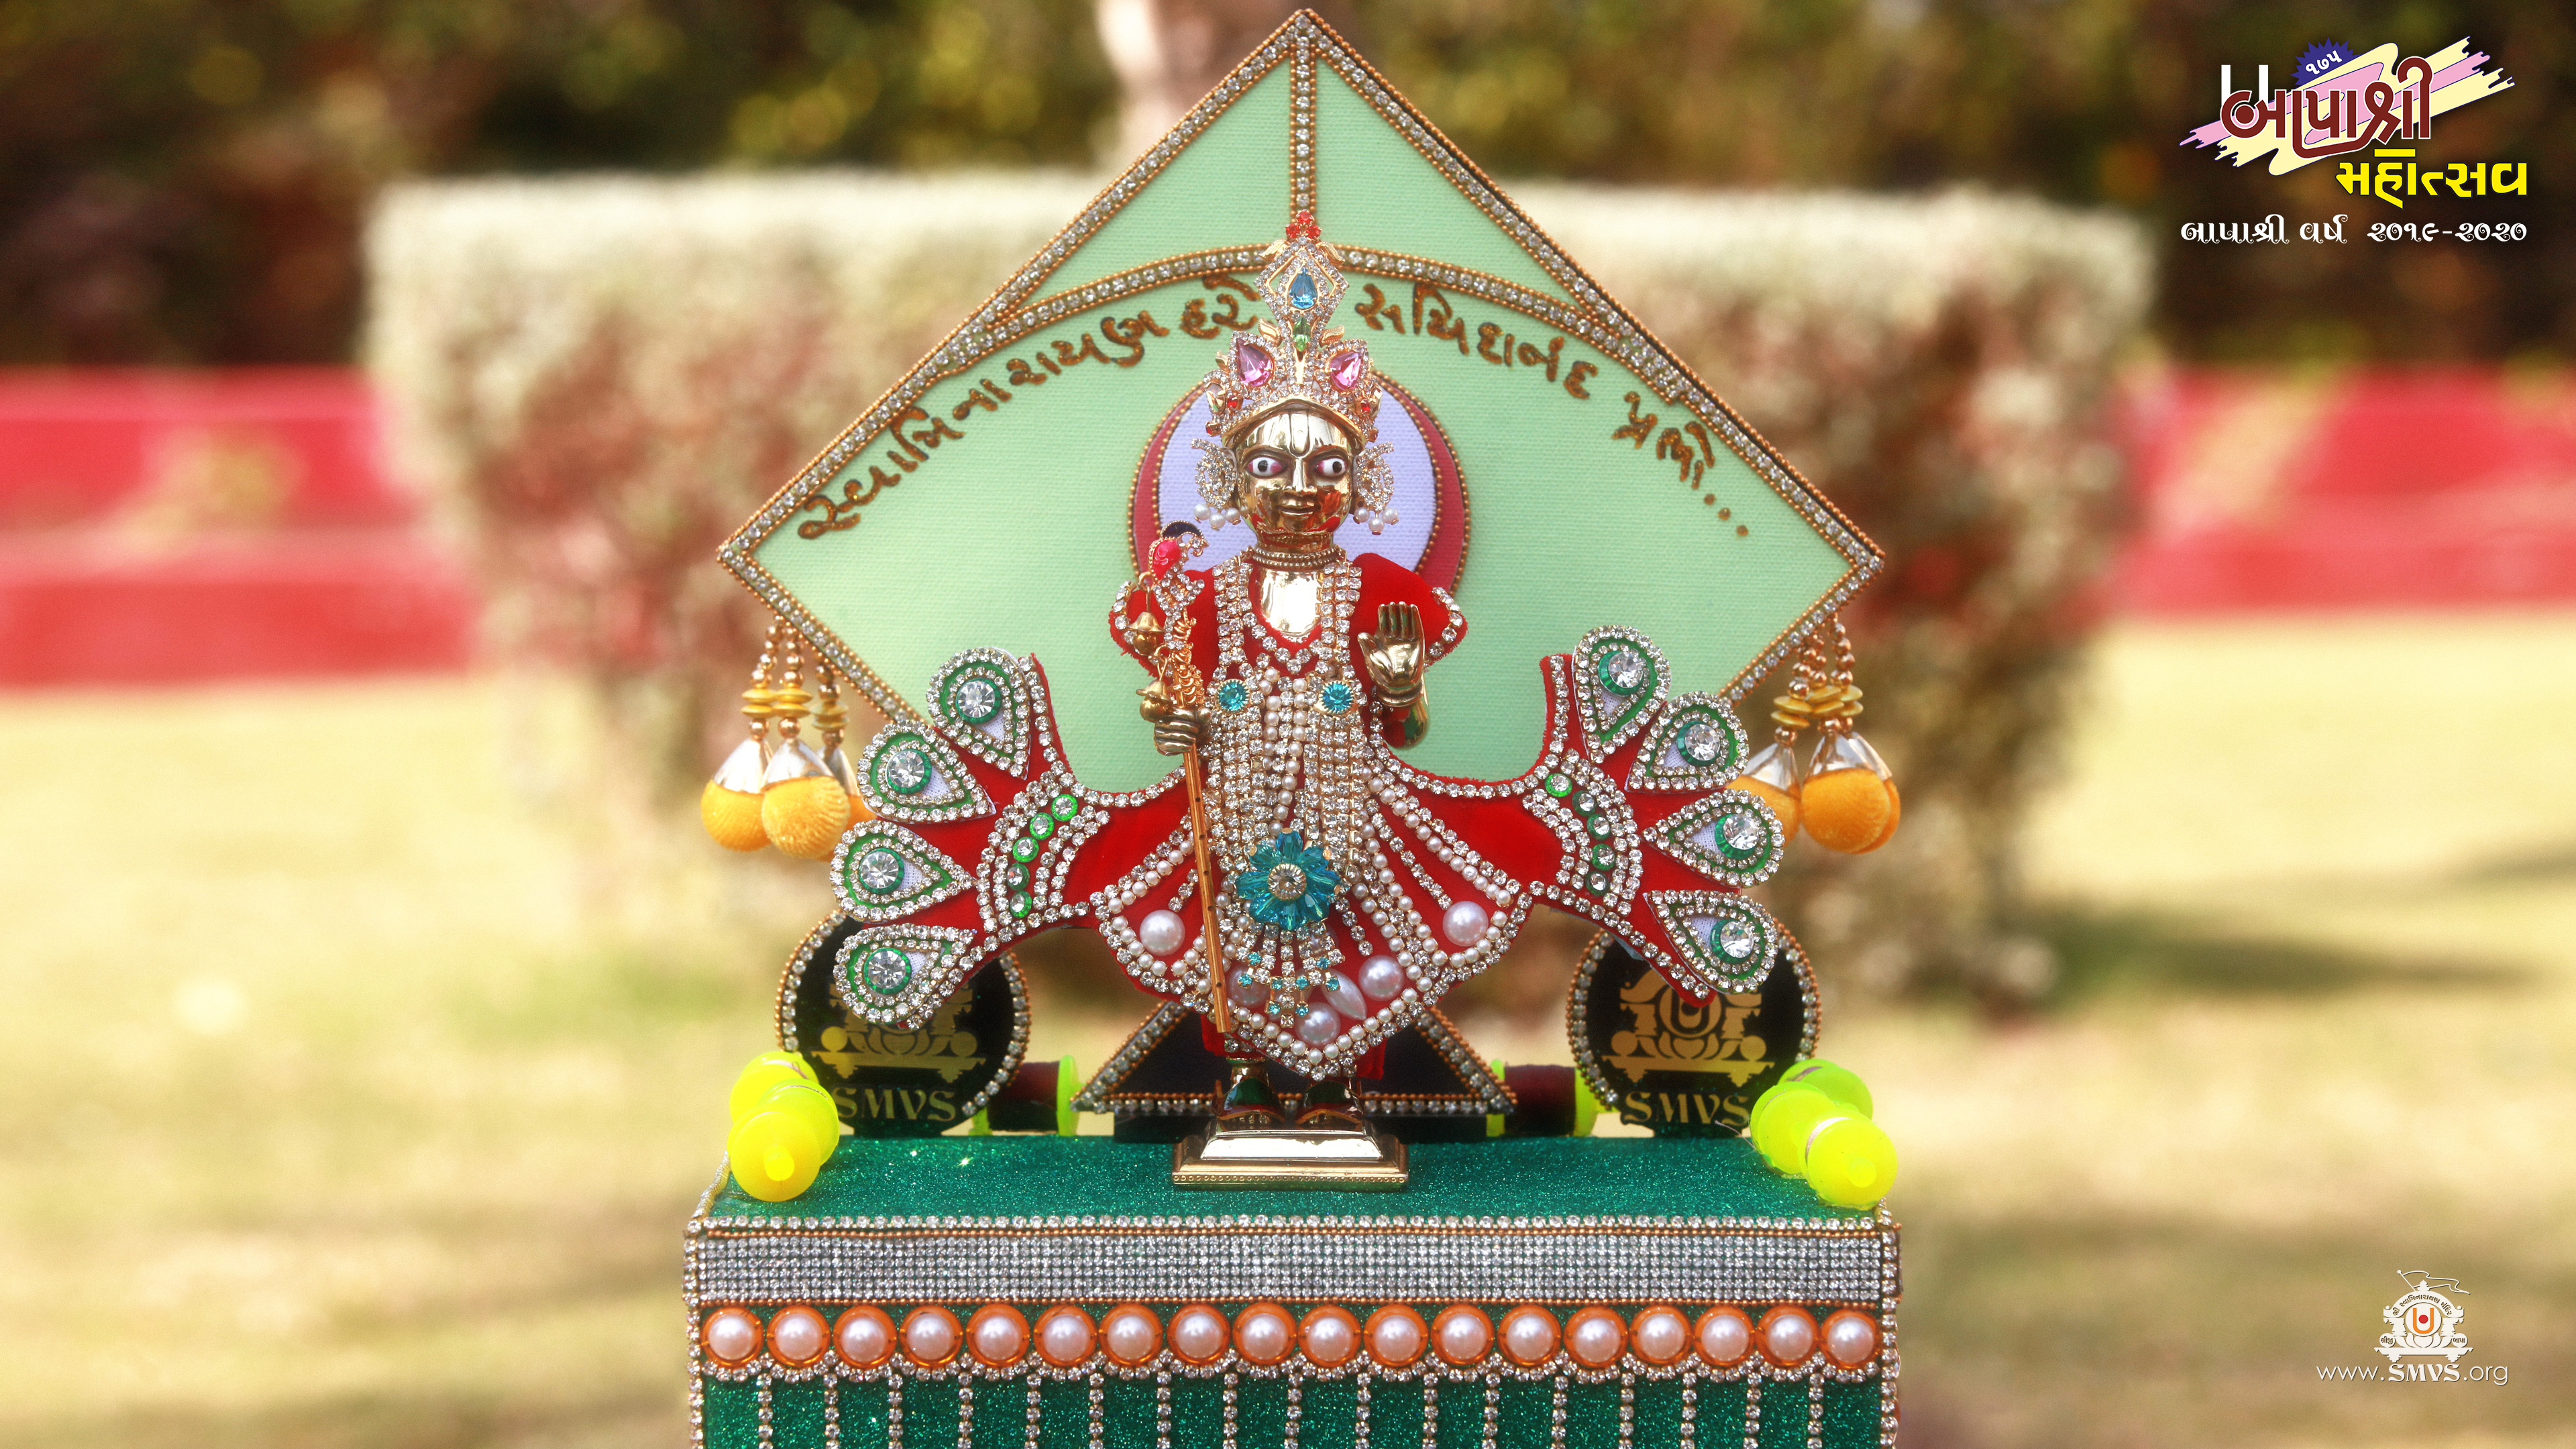 Swaminarayan Mandir Vasna Sanstha - SMVS